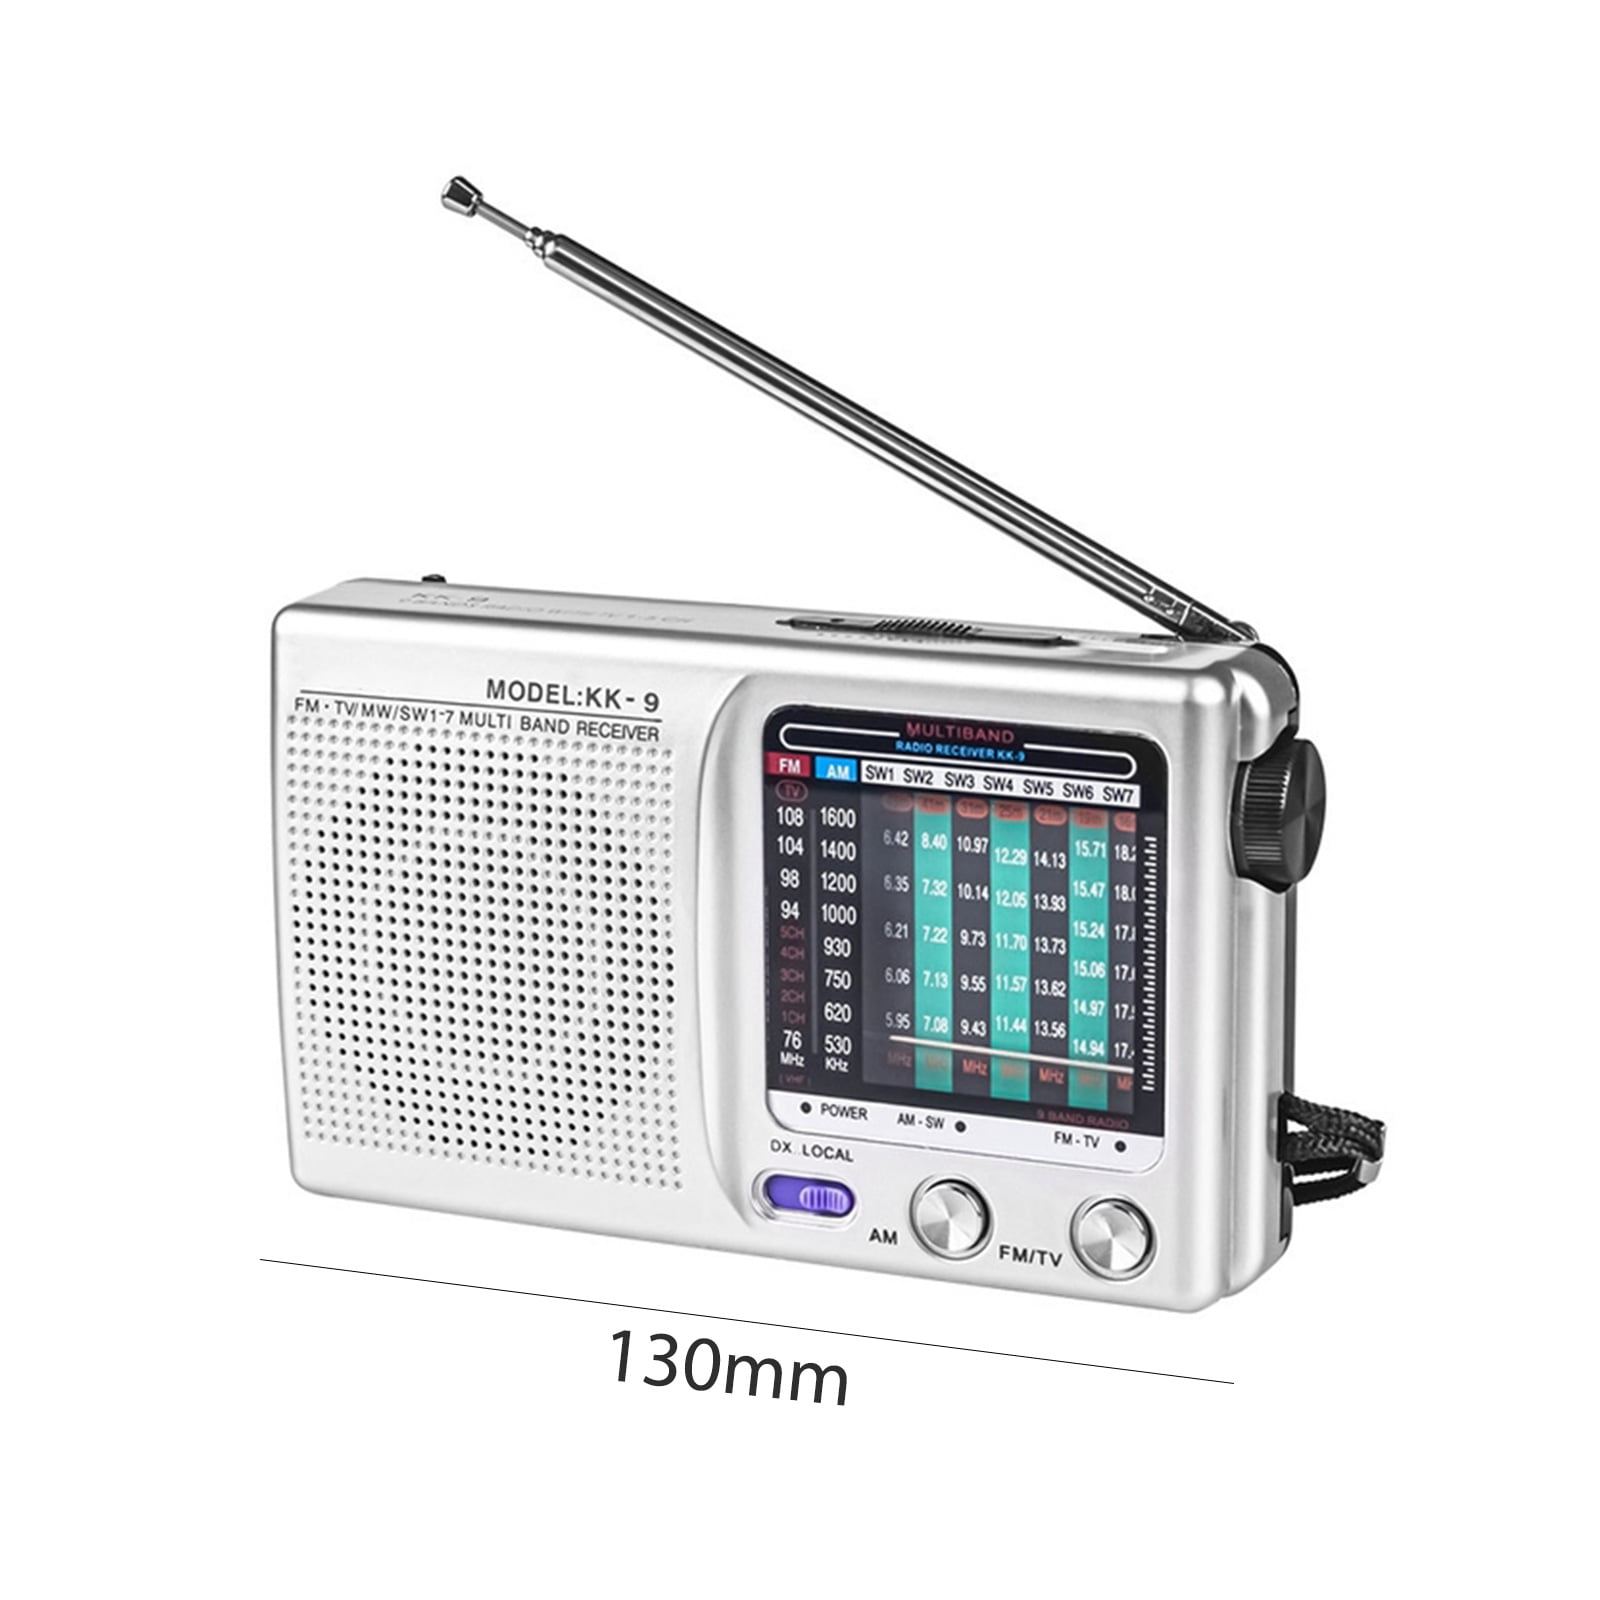 AceMonster Multi-Function Radio FM/AM/SW Multi-Band Radio Portable